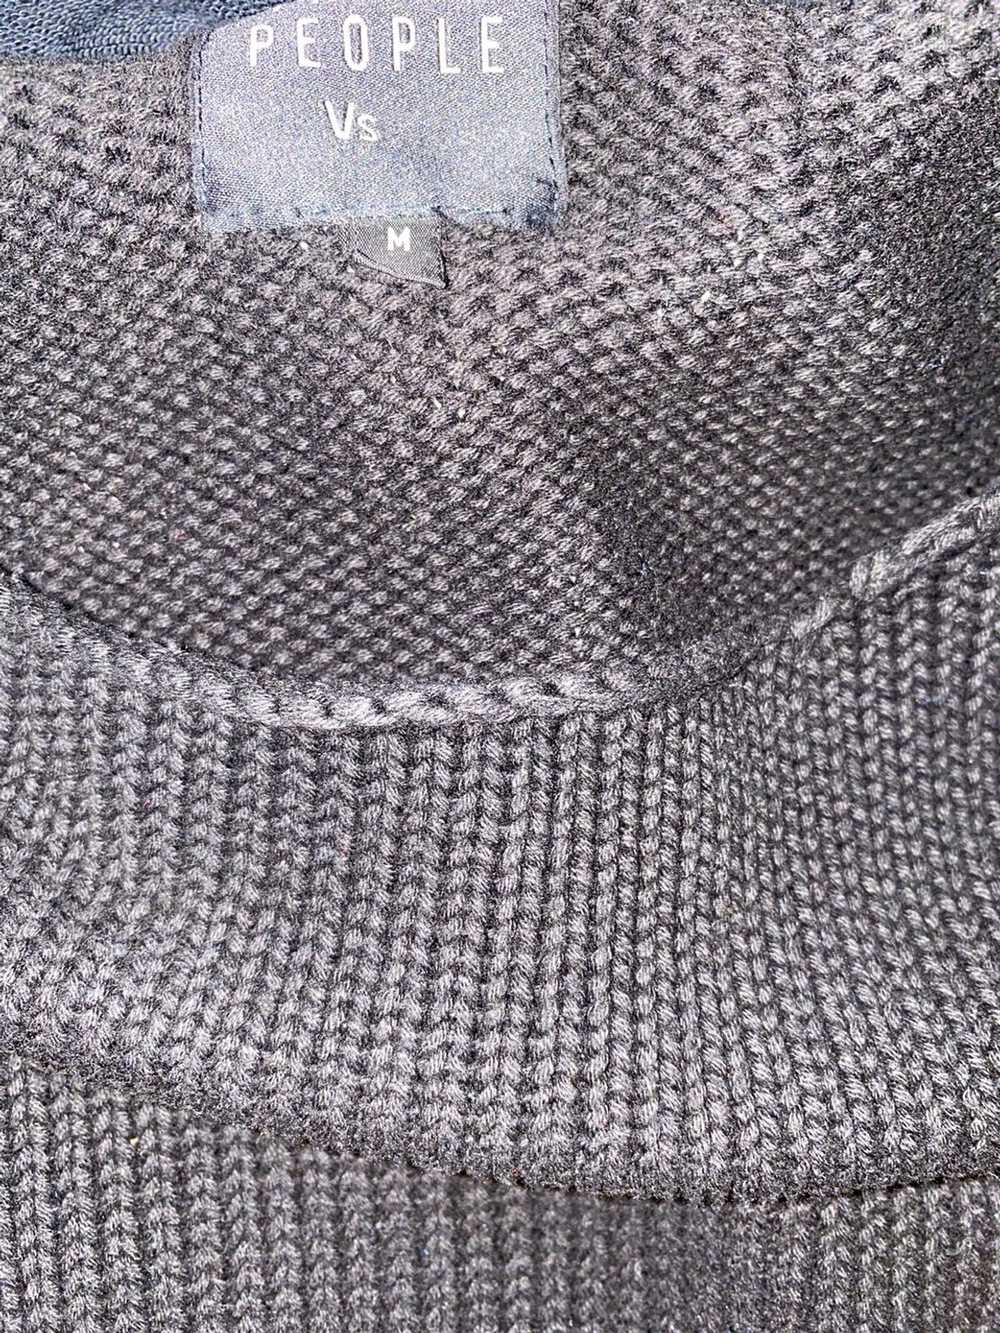 The People Vs Black Knitwear Sweater - image 8